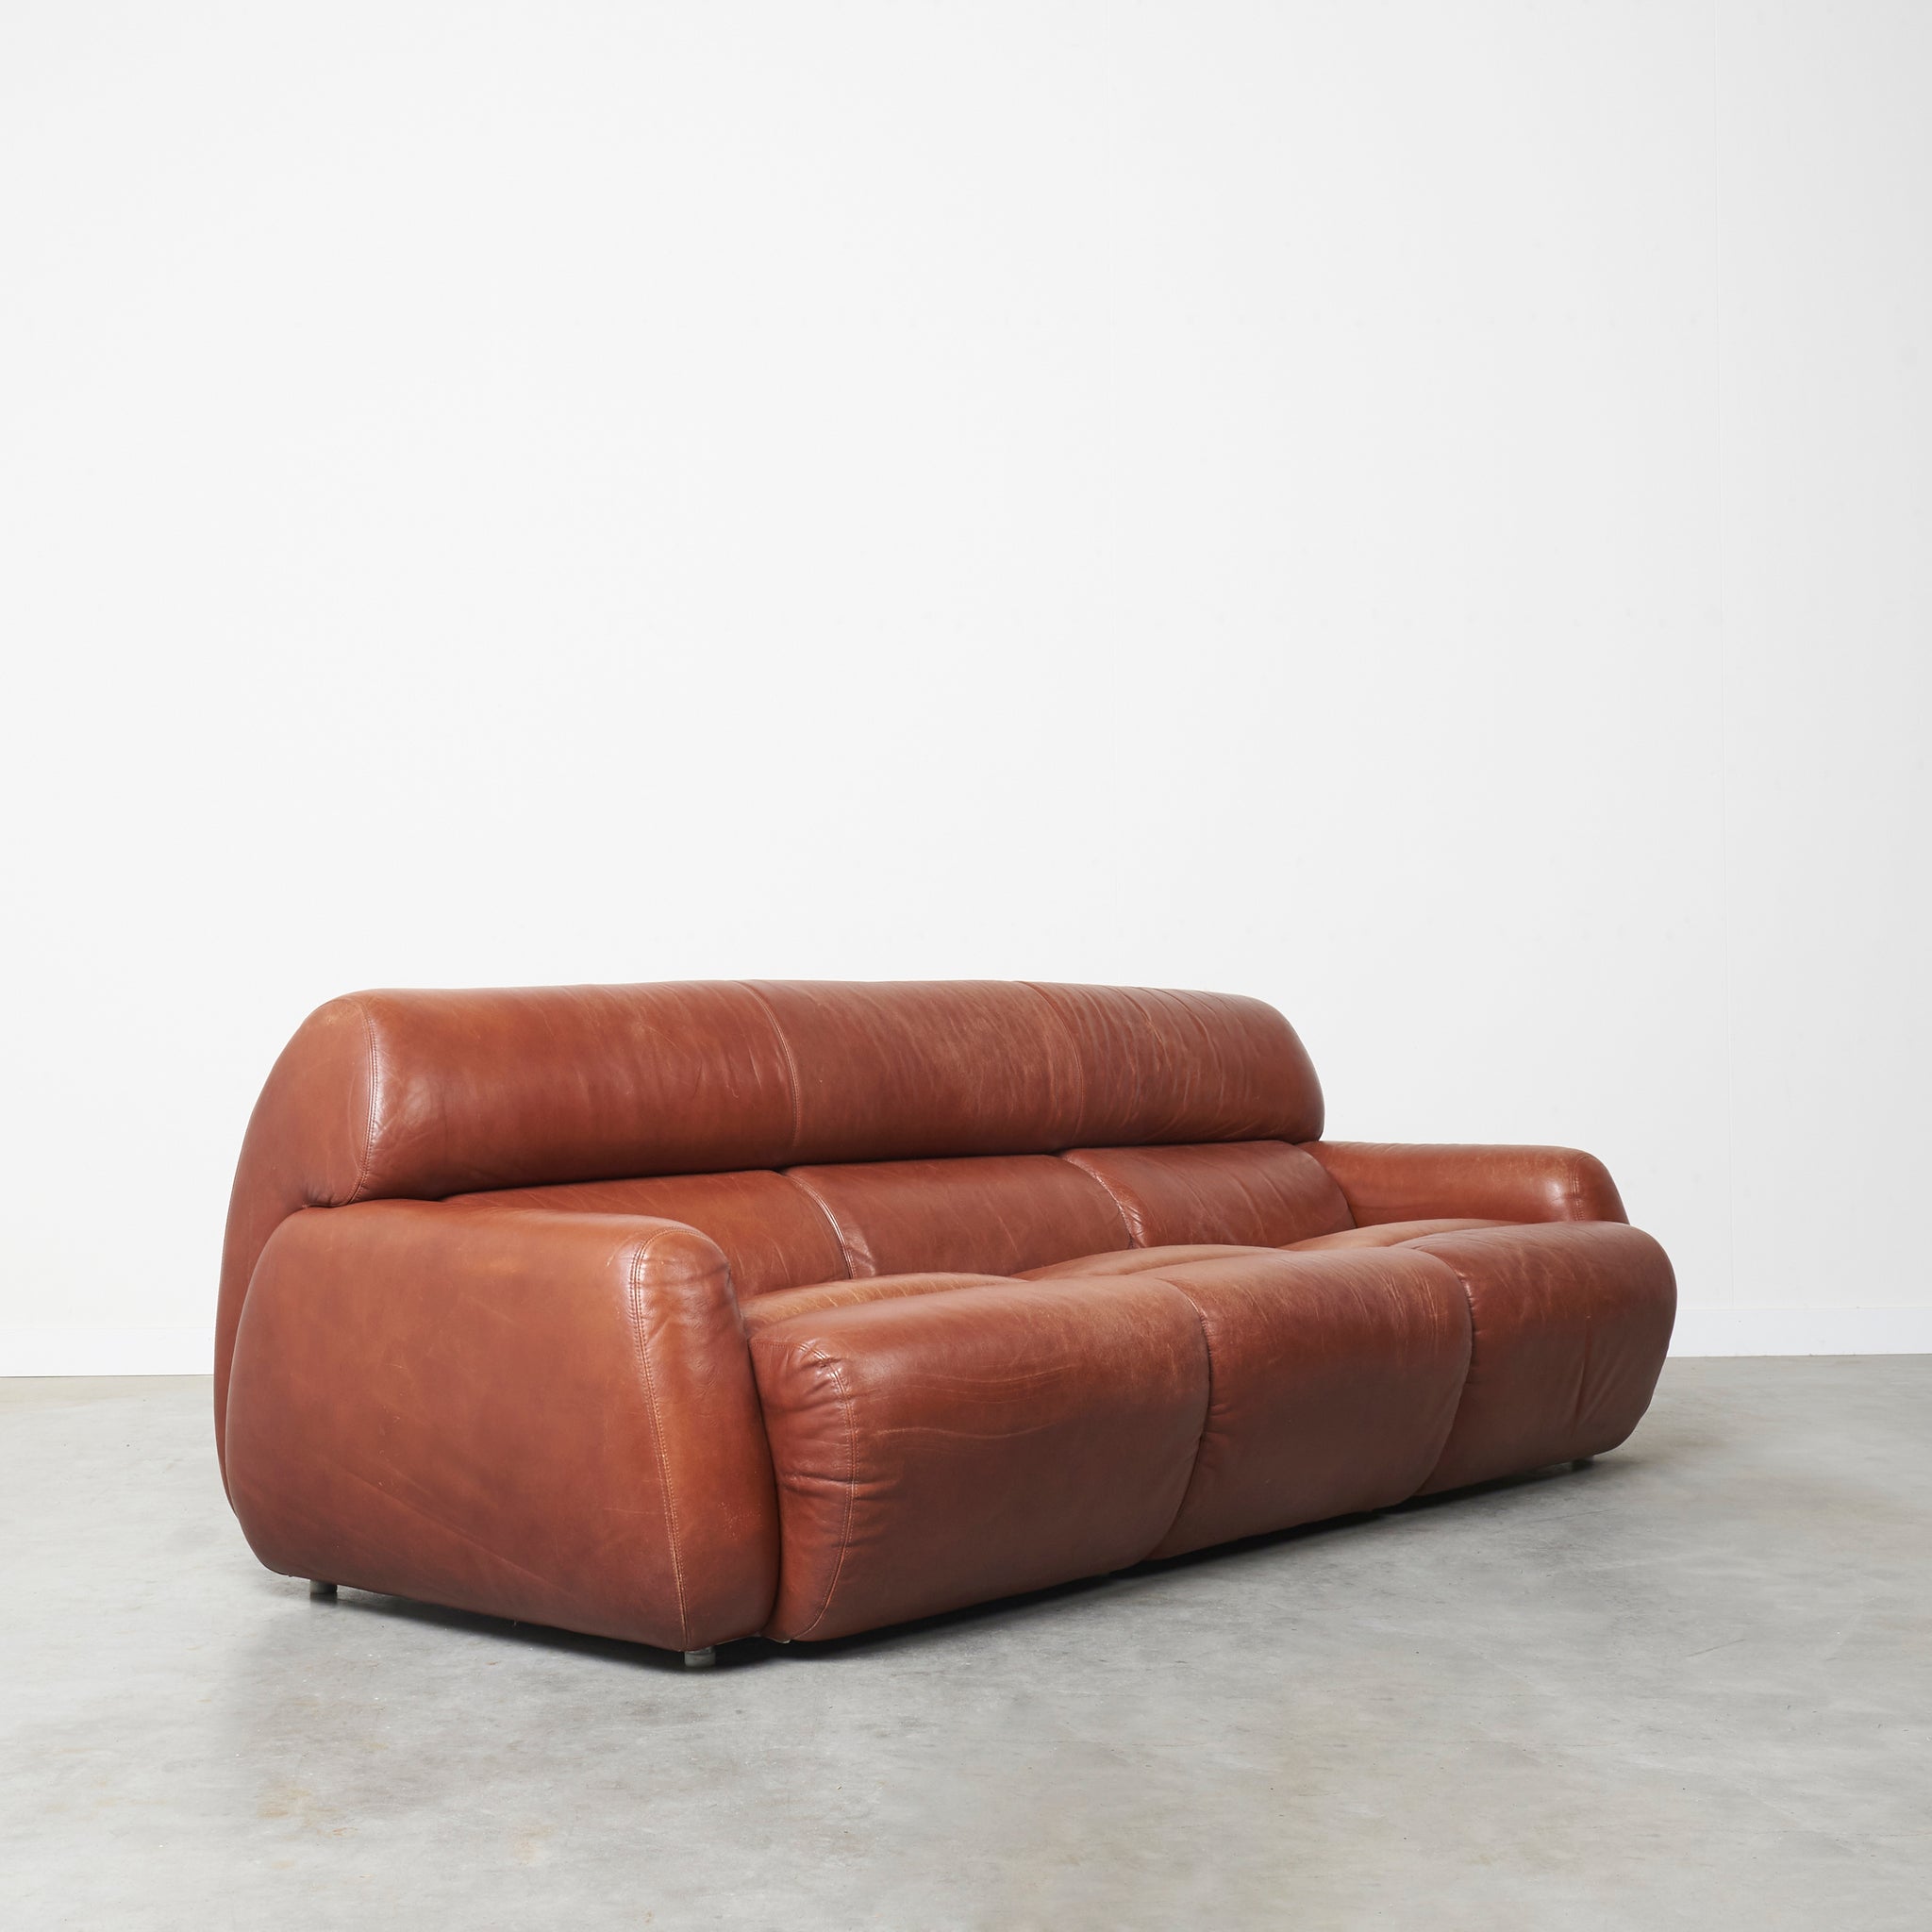 Three seat Italian lounge sofa from the 1970s